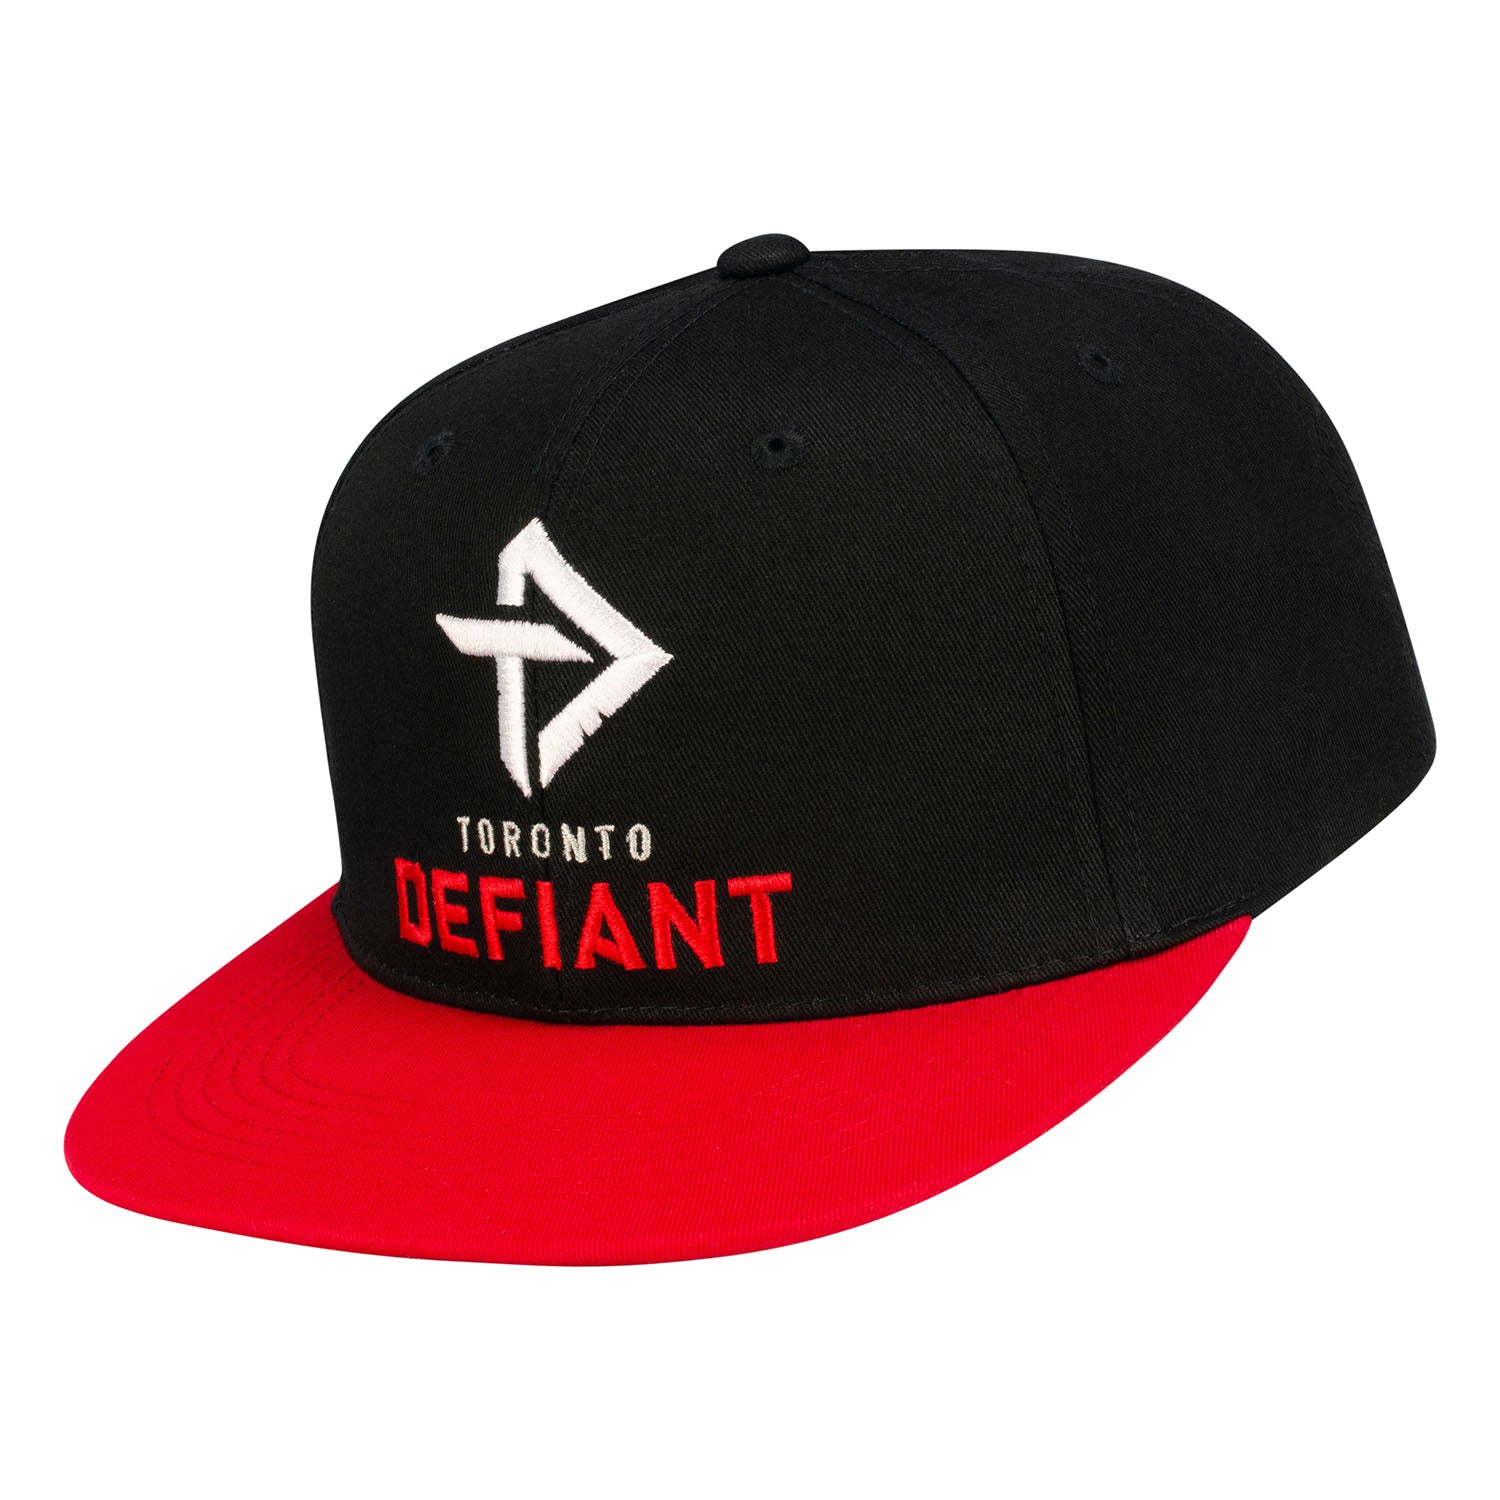 Toronto Defiant Black Snapback Hat - Left View